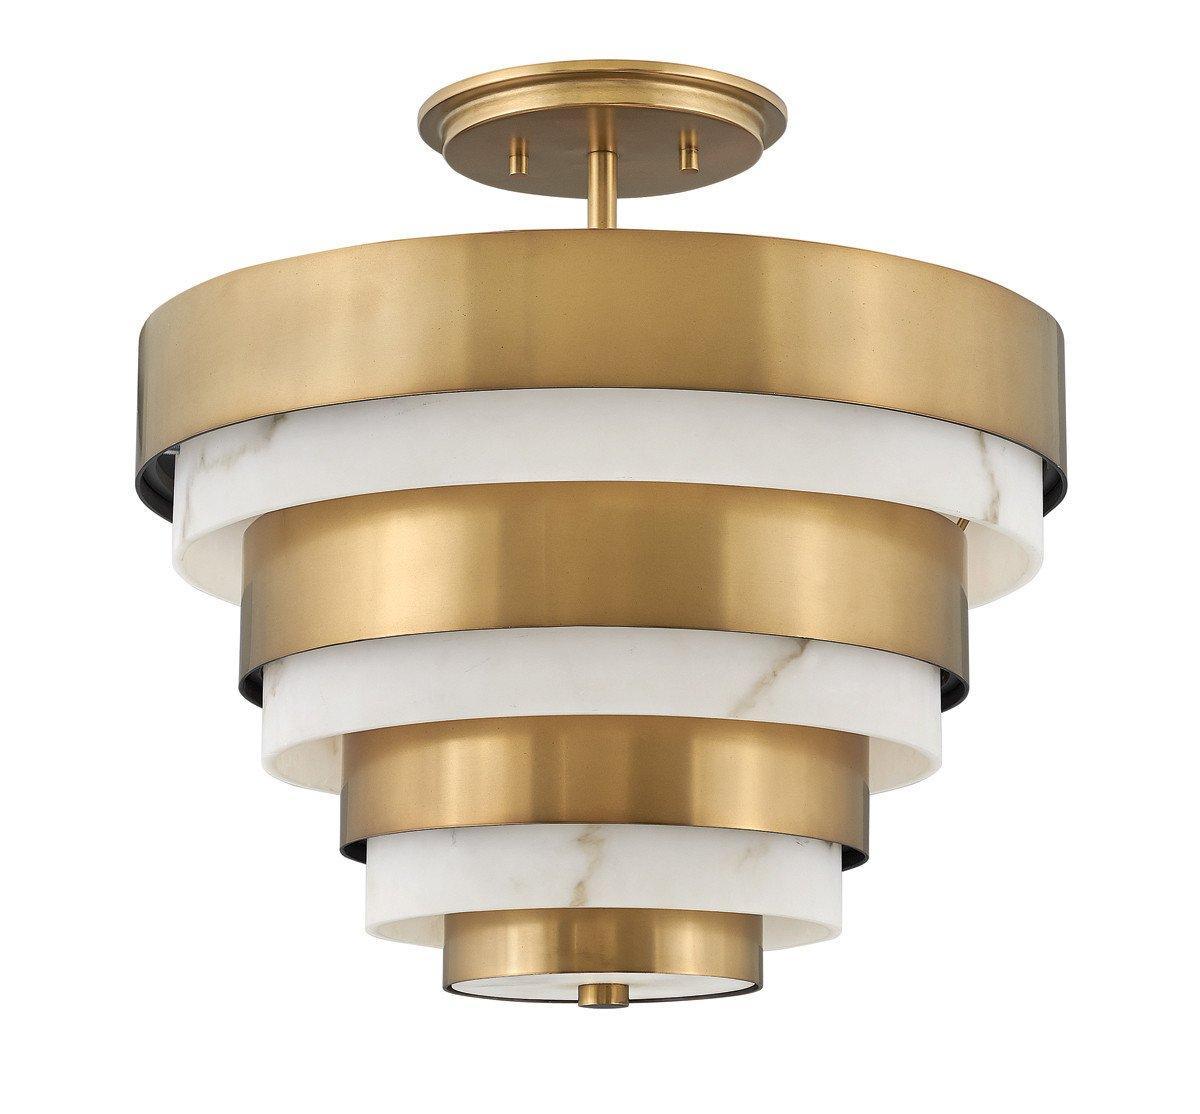 Hinkley Echelon Cylindrical Ceiling Light Heritage Brass